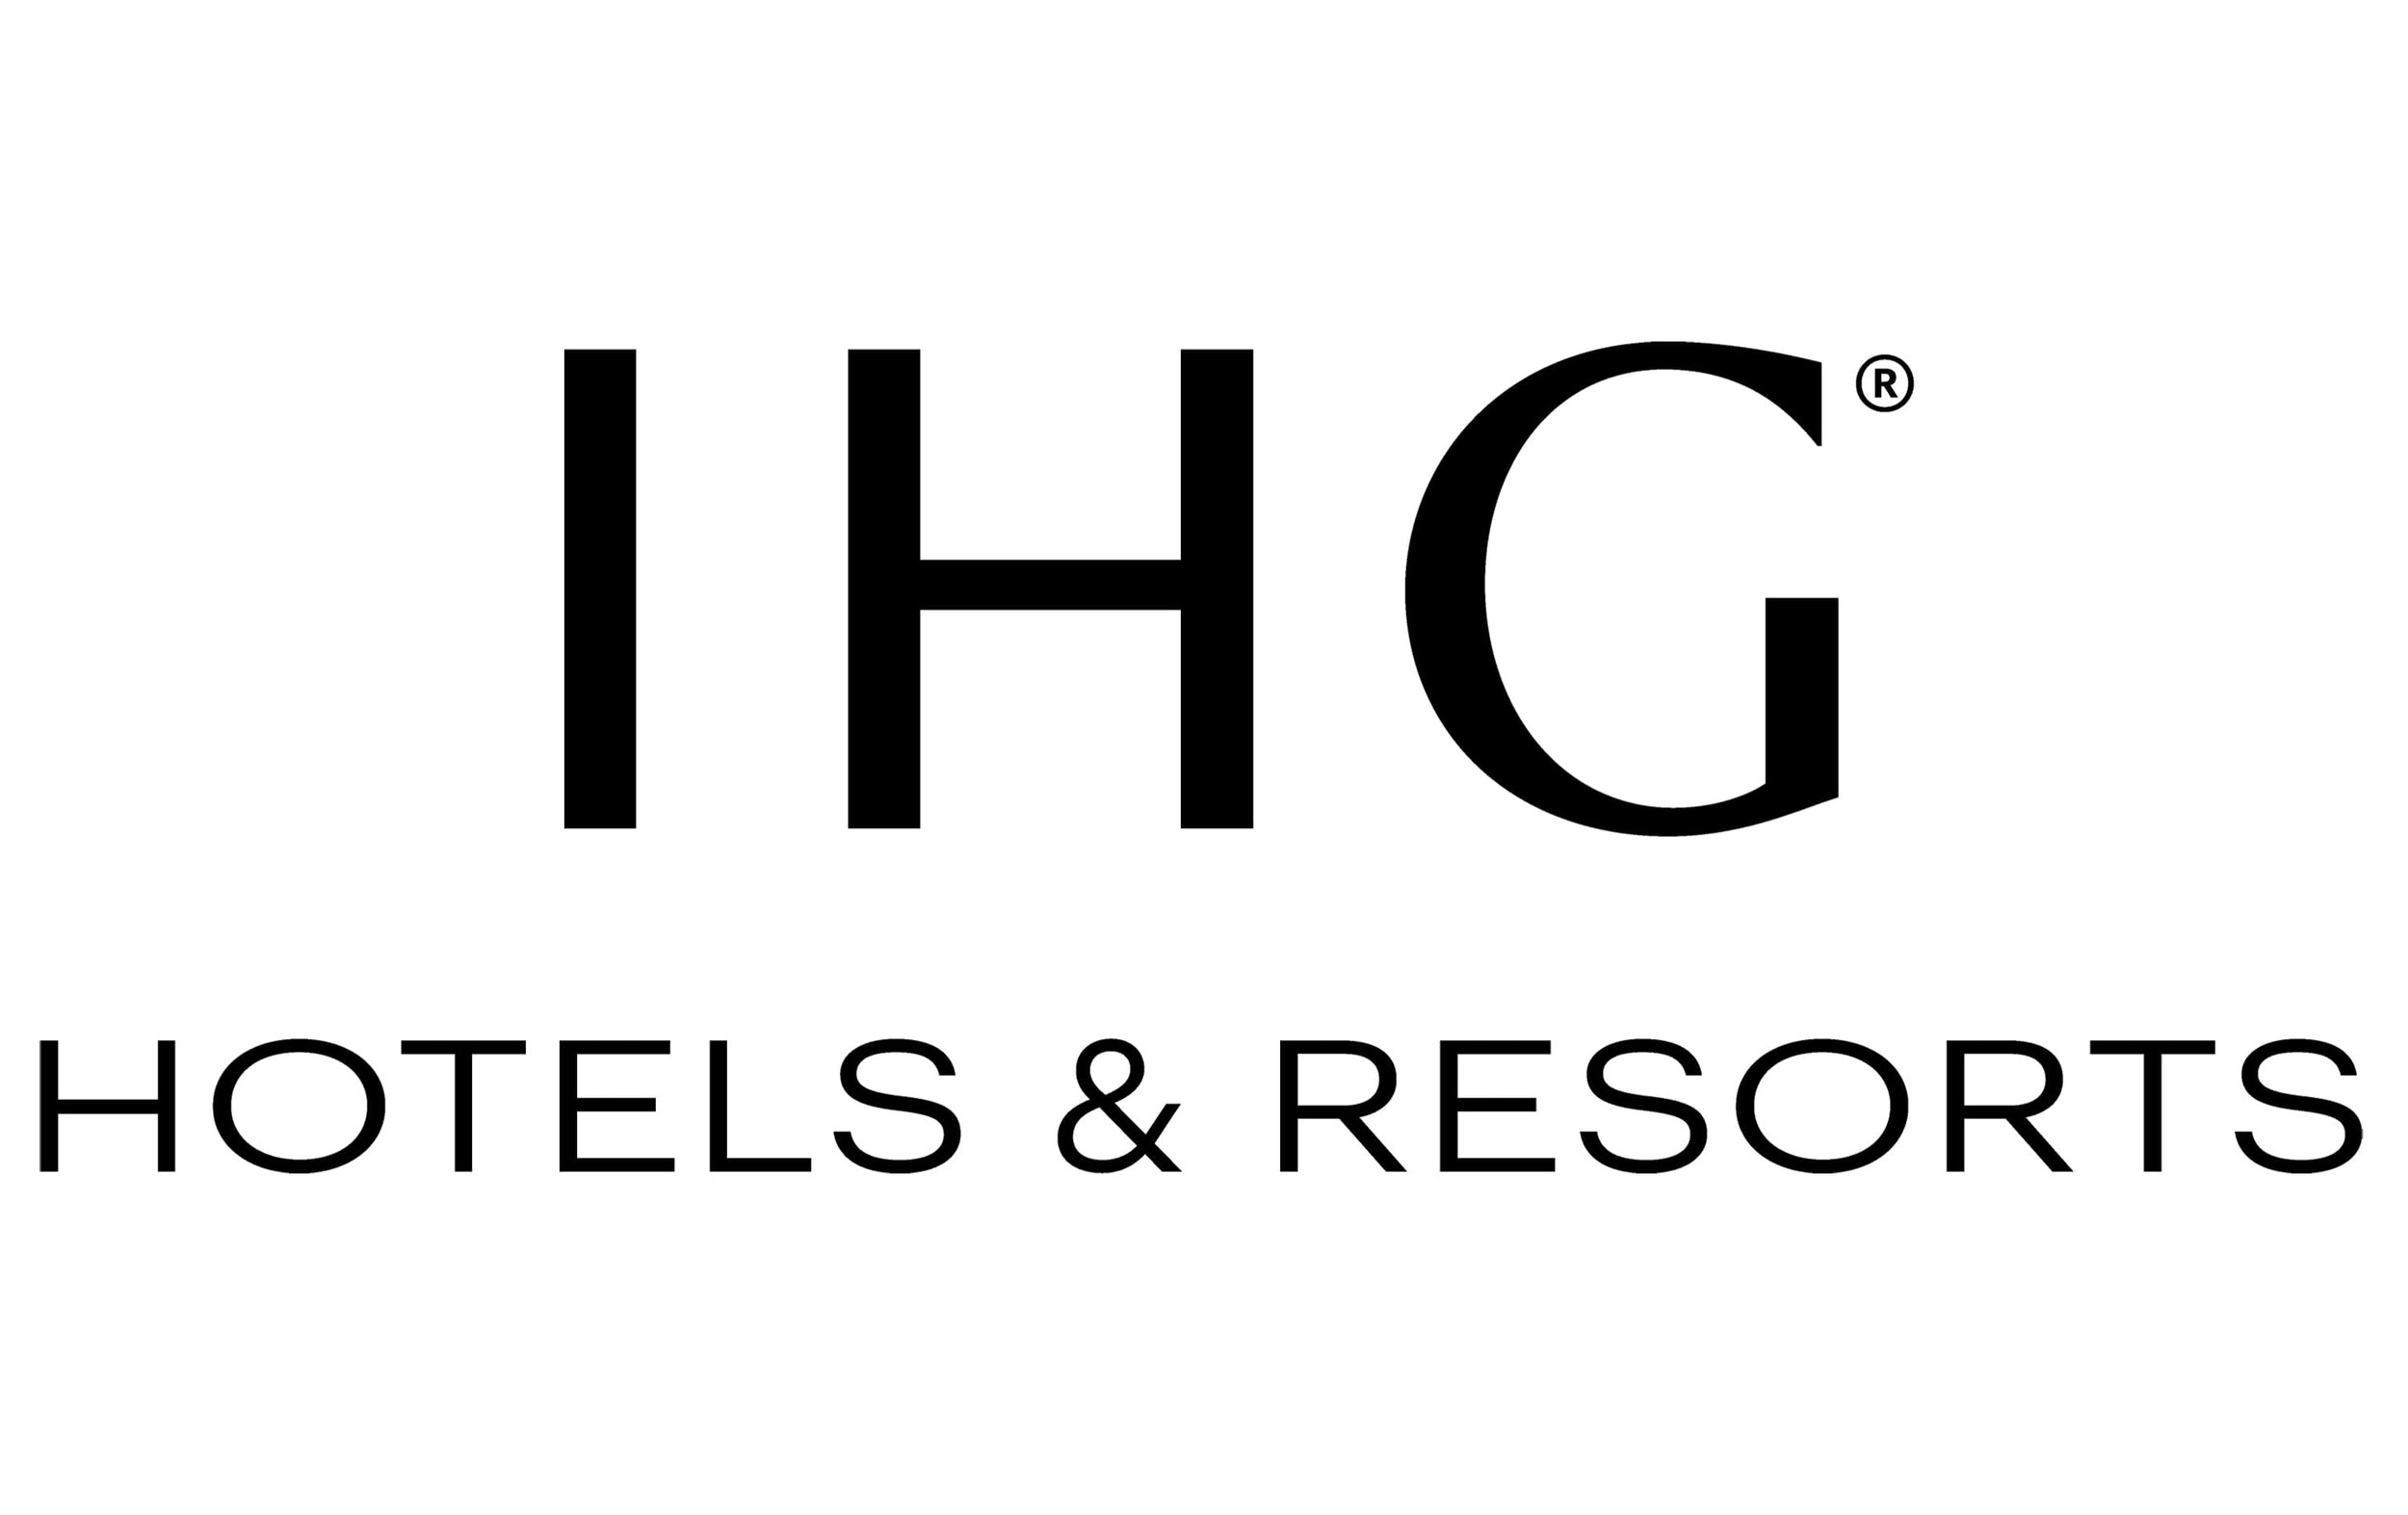 IHG-Logo.jpg